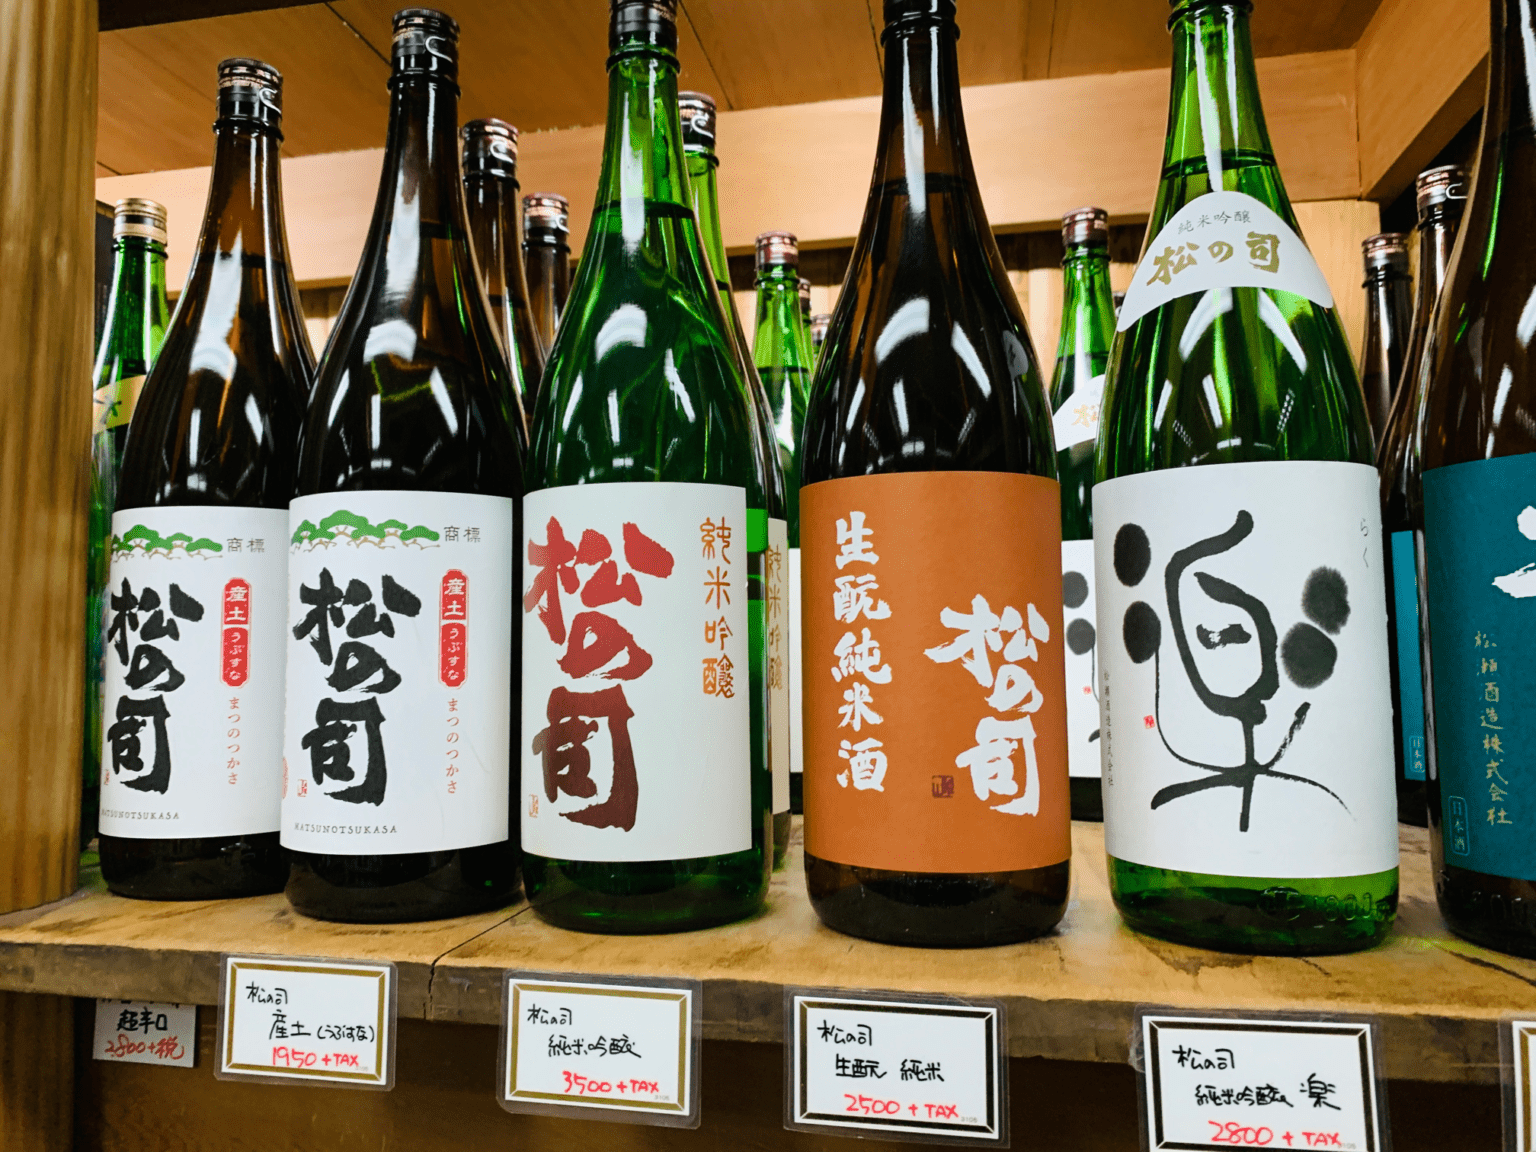 Alcohol bottles in japan